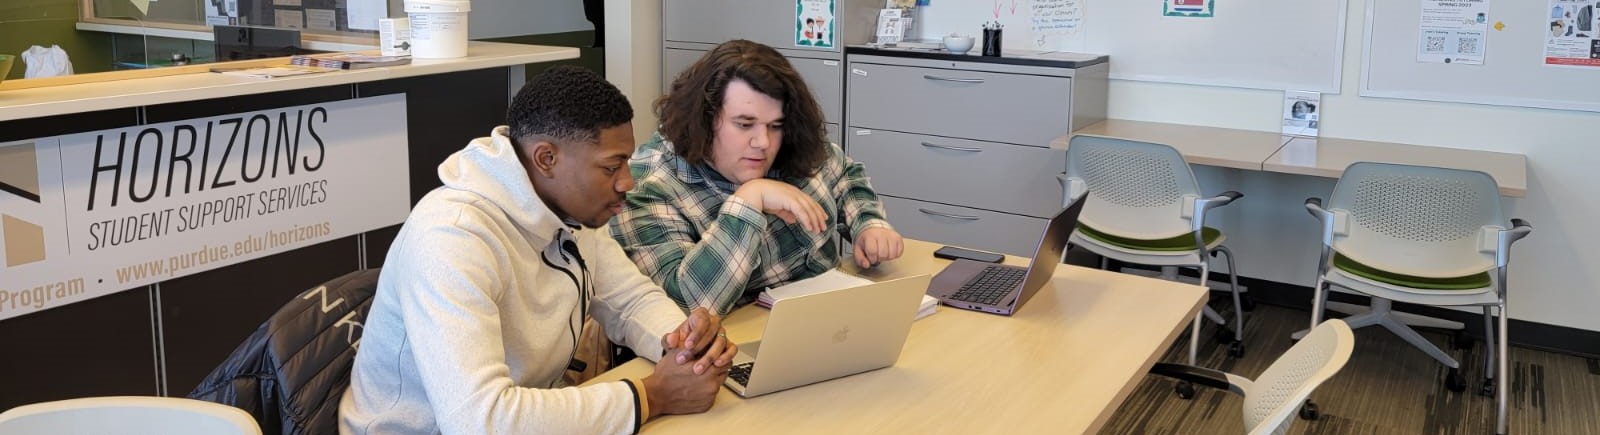 banner image: students sit at desk working together on a laptop